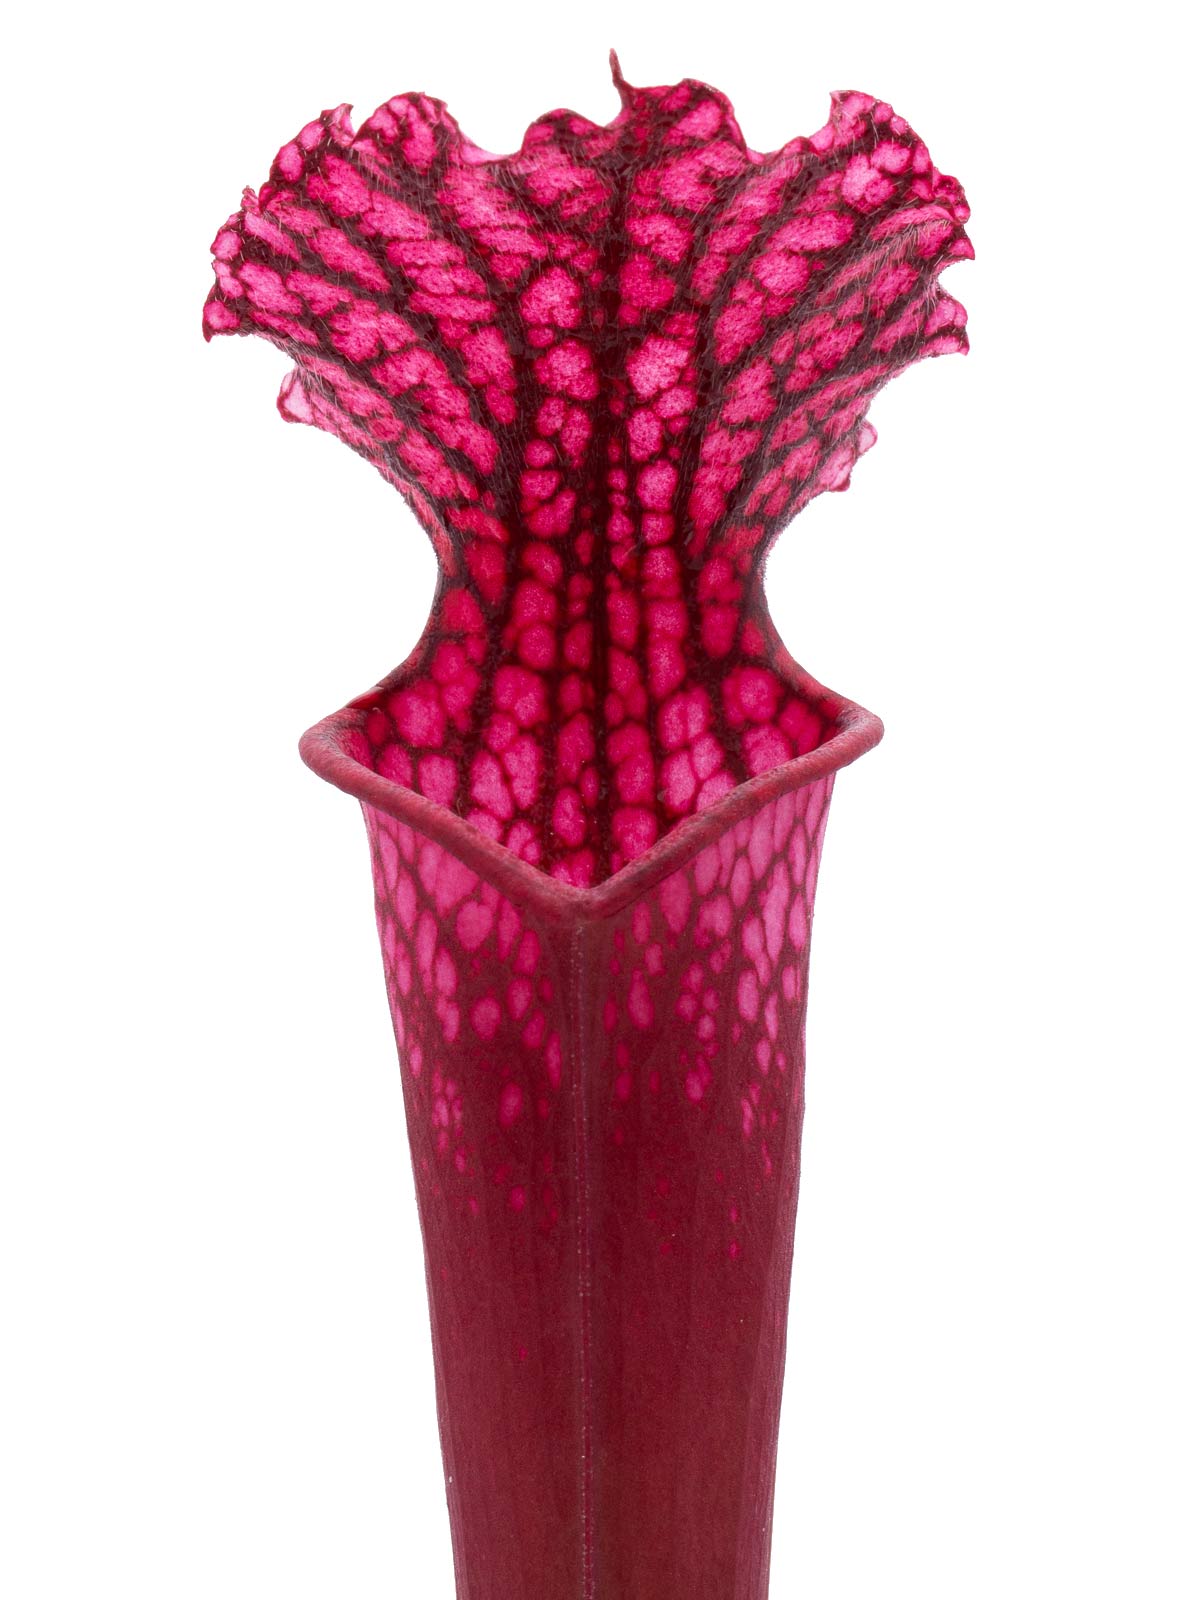 Sarracenia leucophylla - red pitcher, Johannes Betz